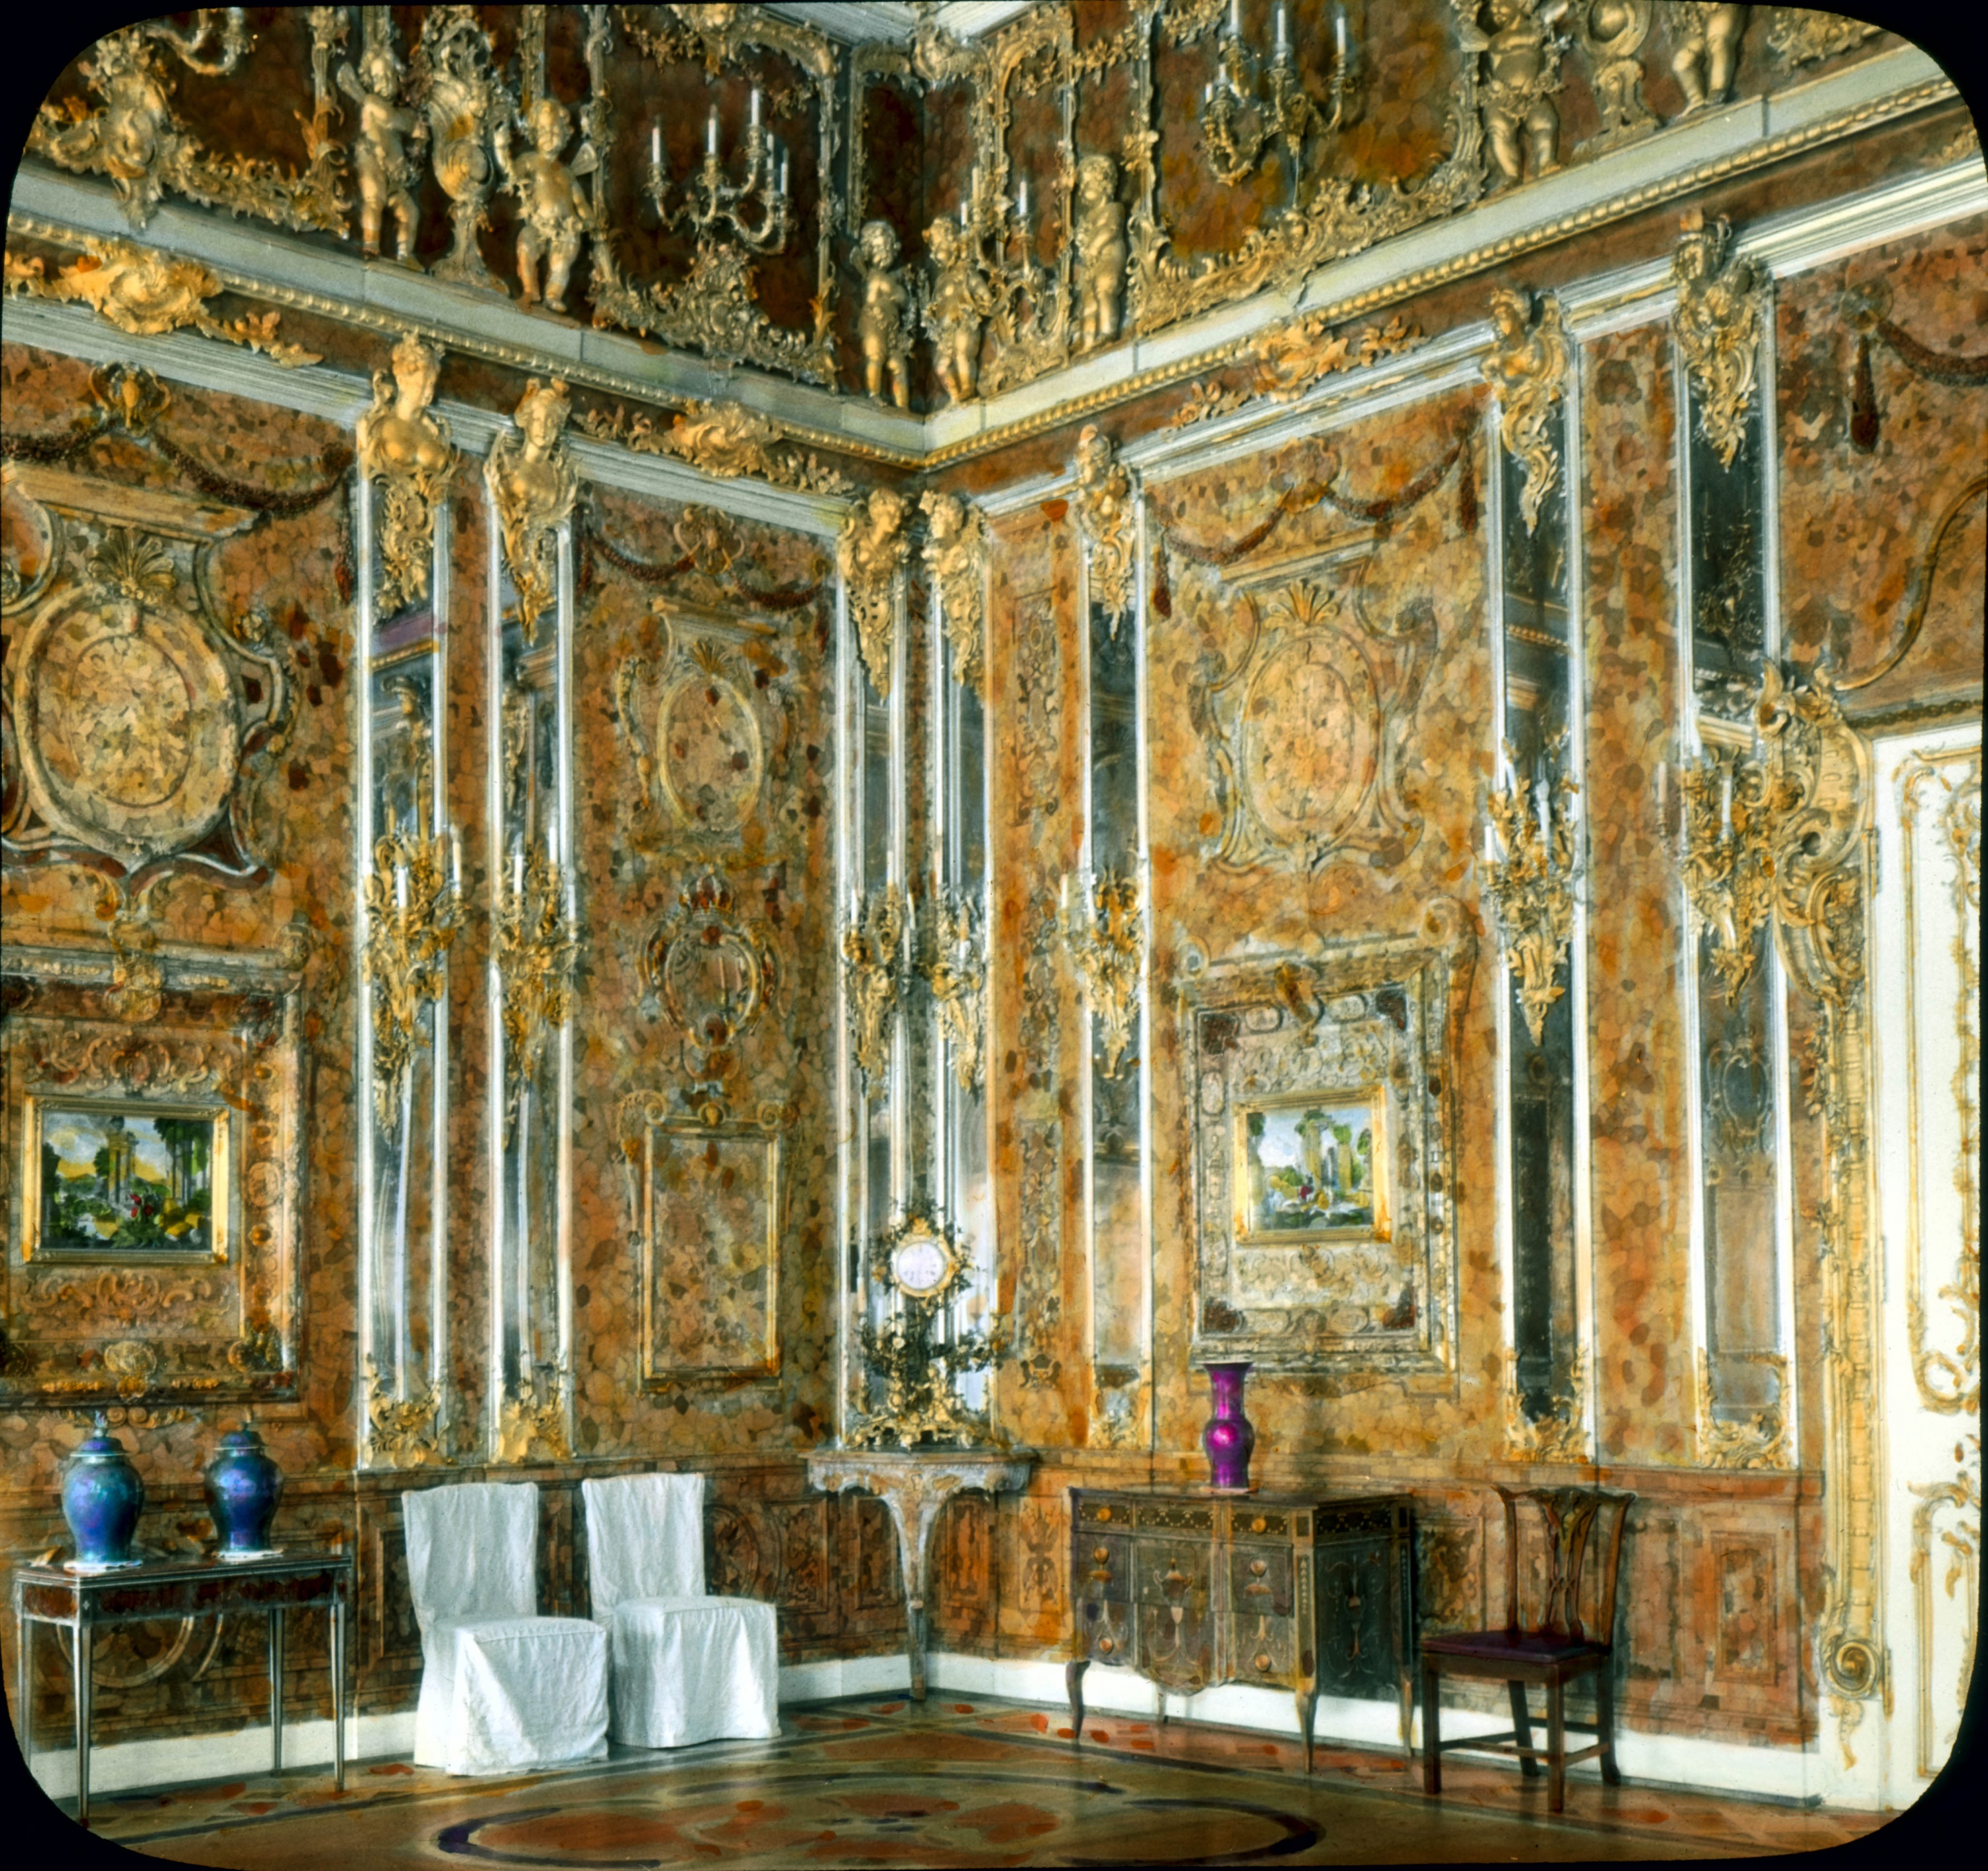 Catherine_Palace_interior_-_Amber_Room_(1).jpg